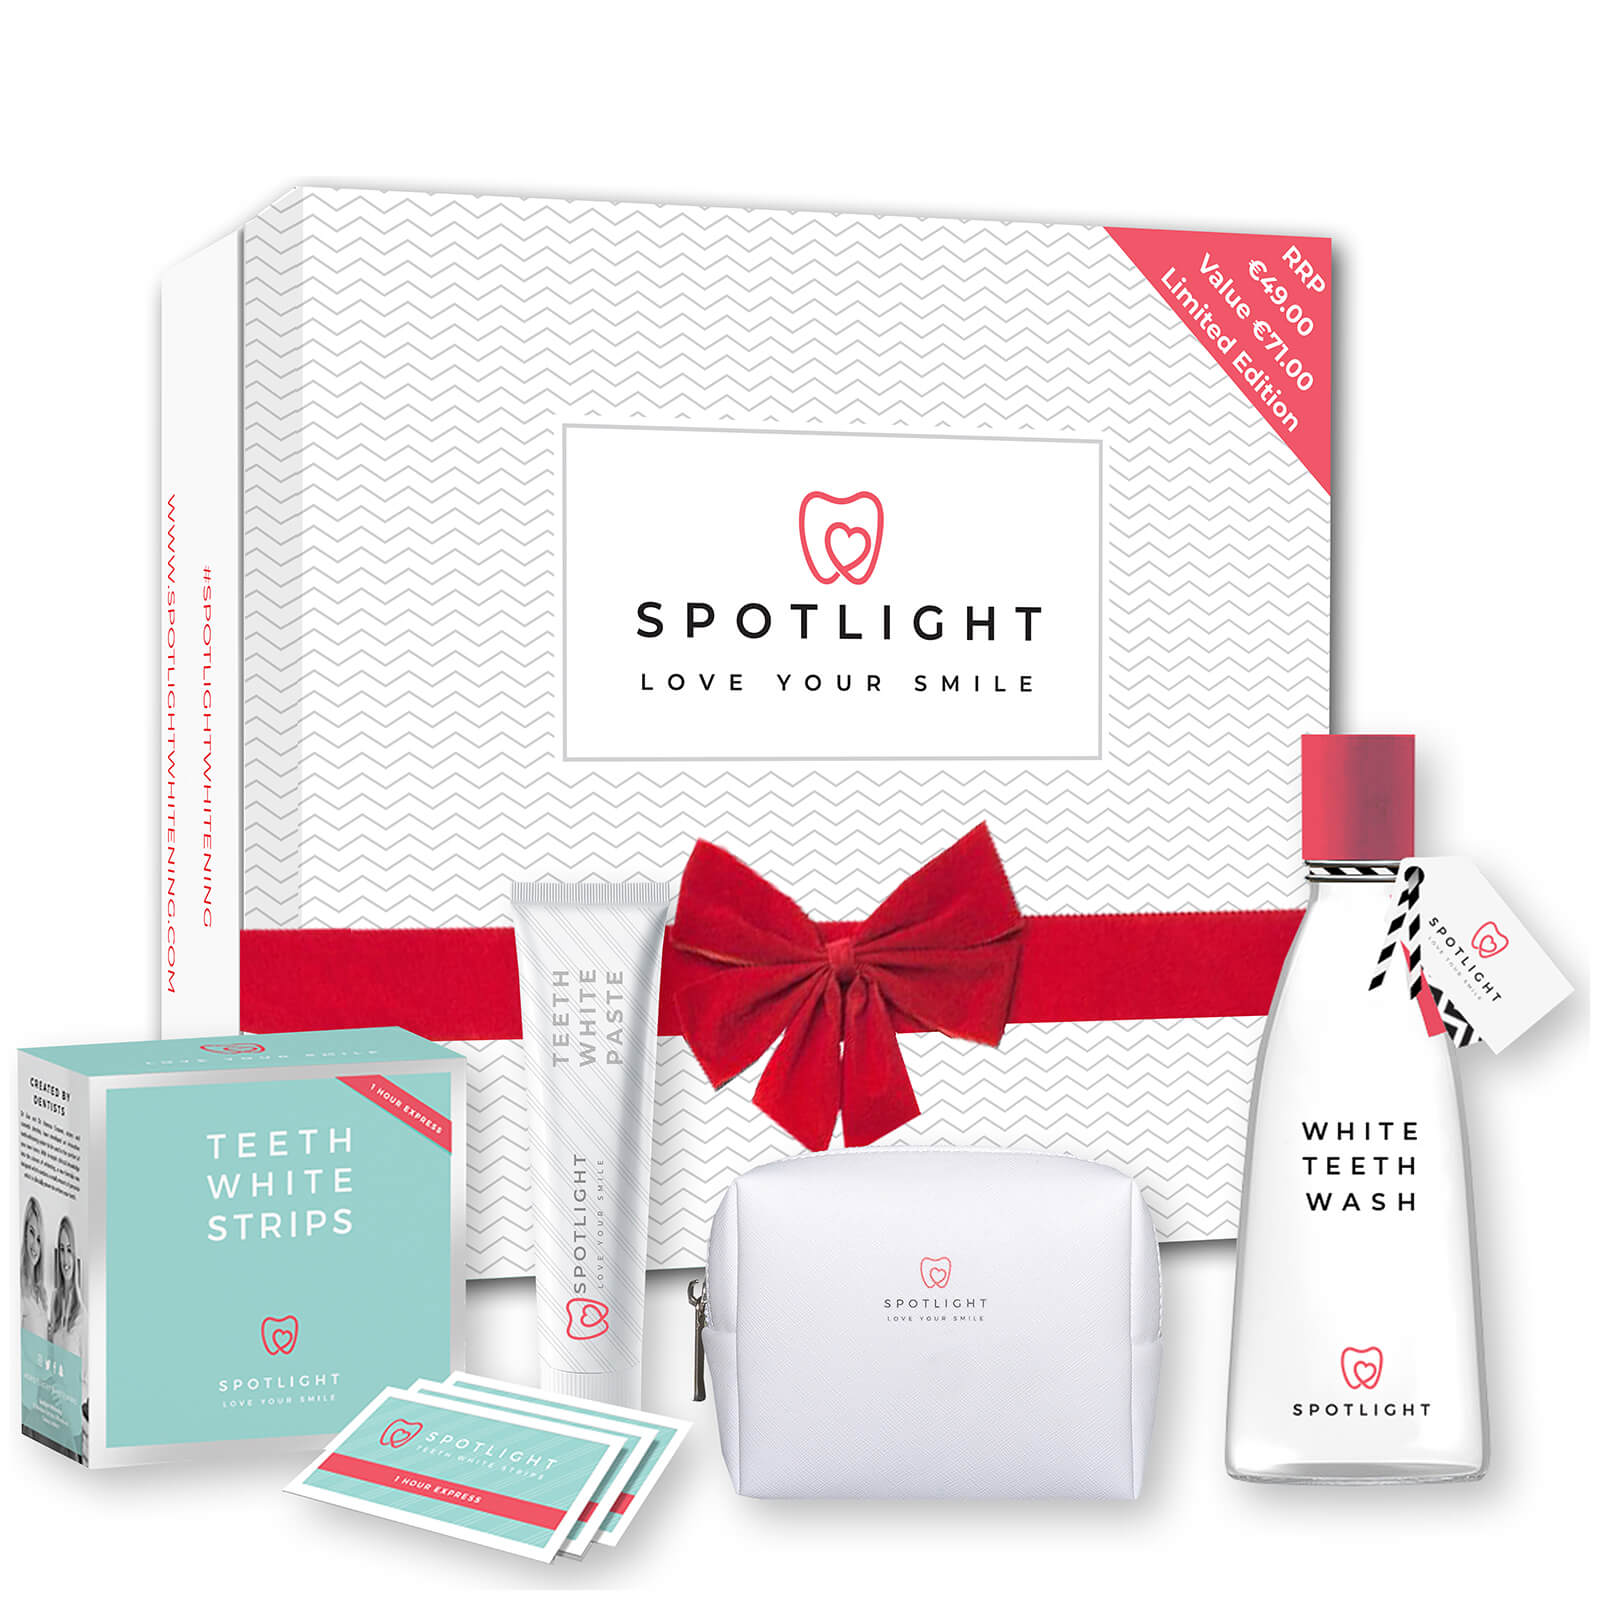 Spotlight Limited Edition Gift Set